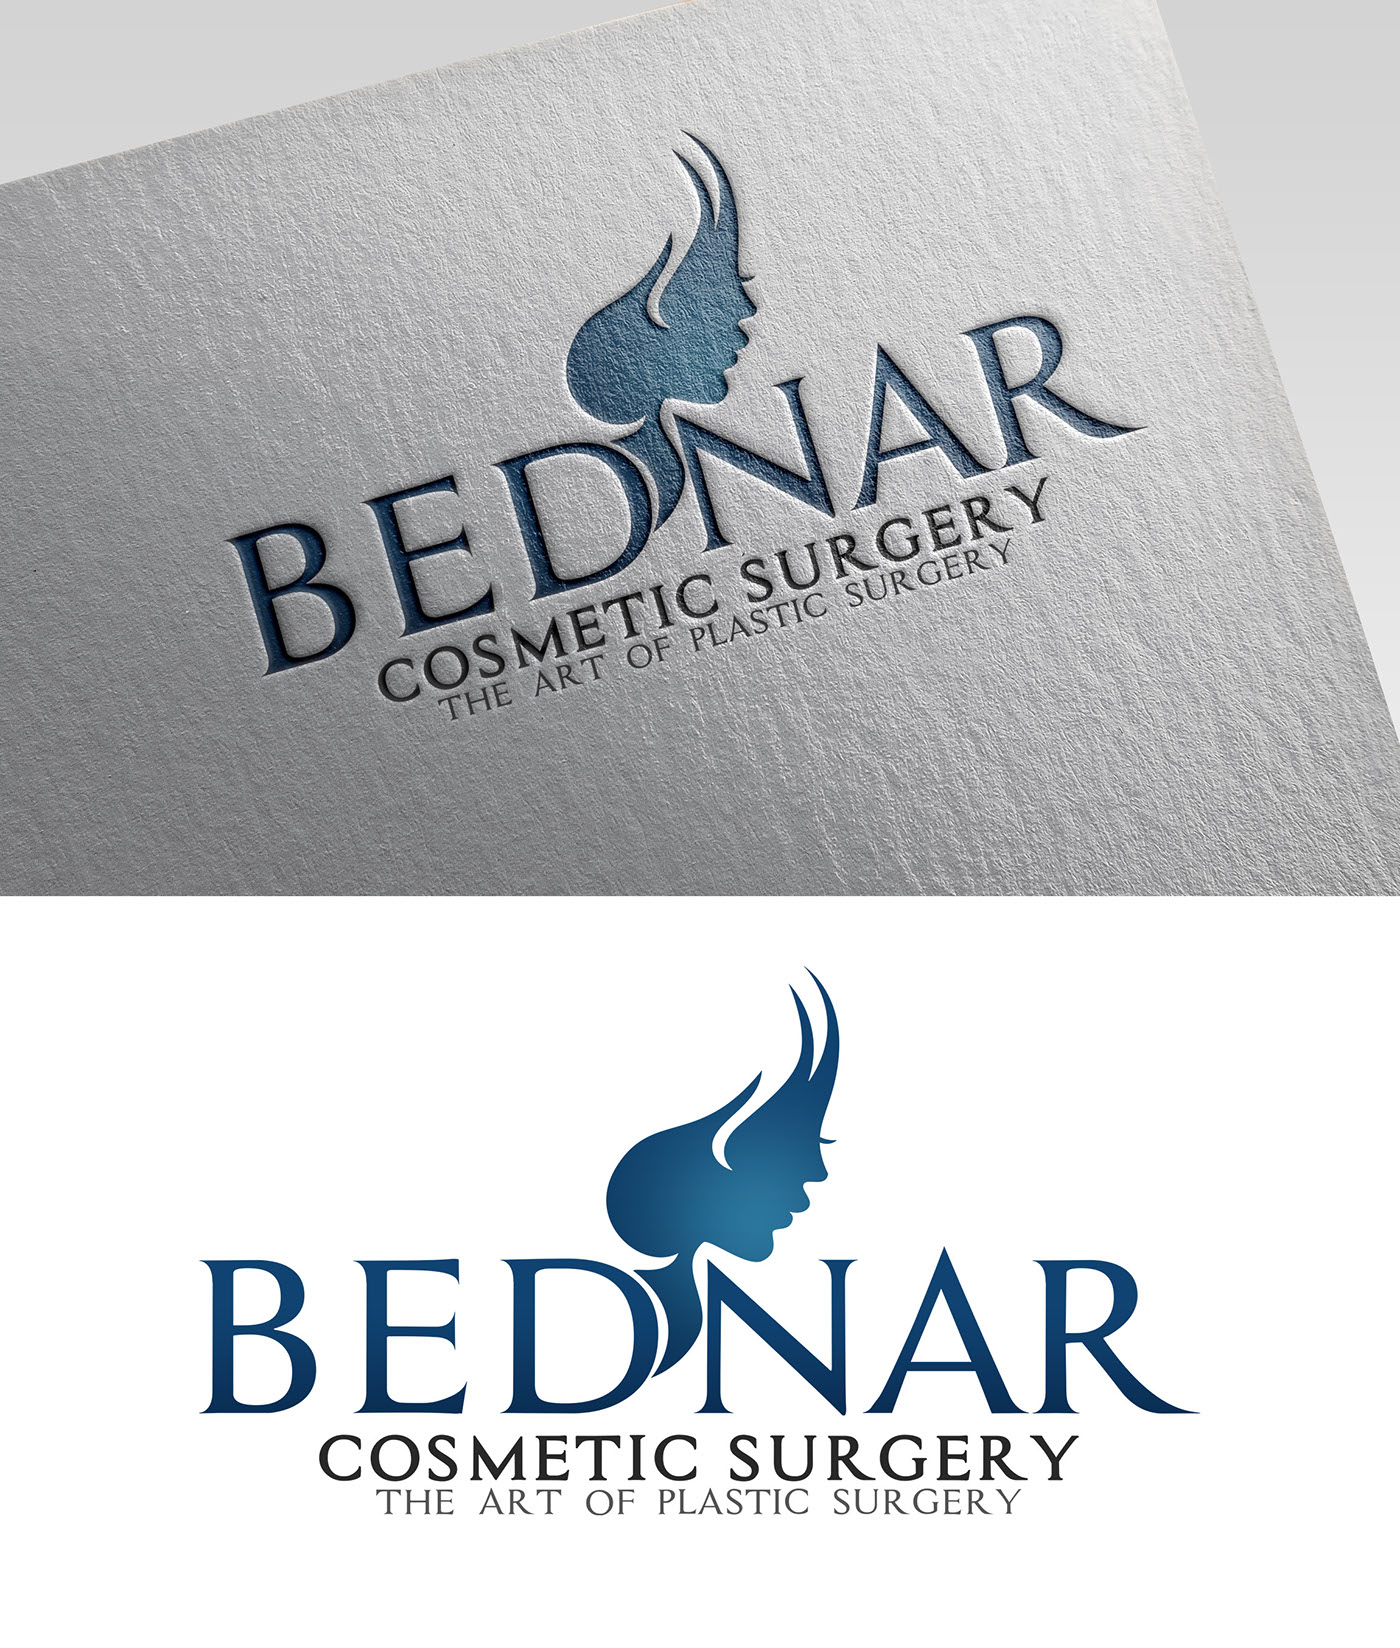 Bednar Cosmetic Surgery - Logo.